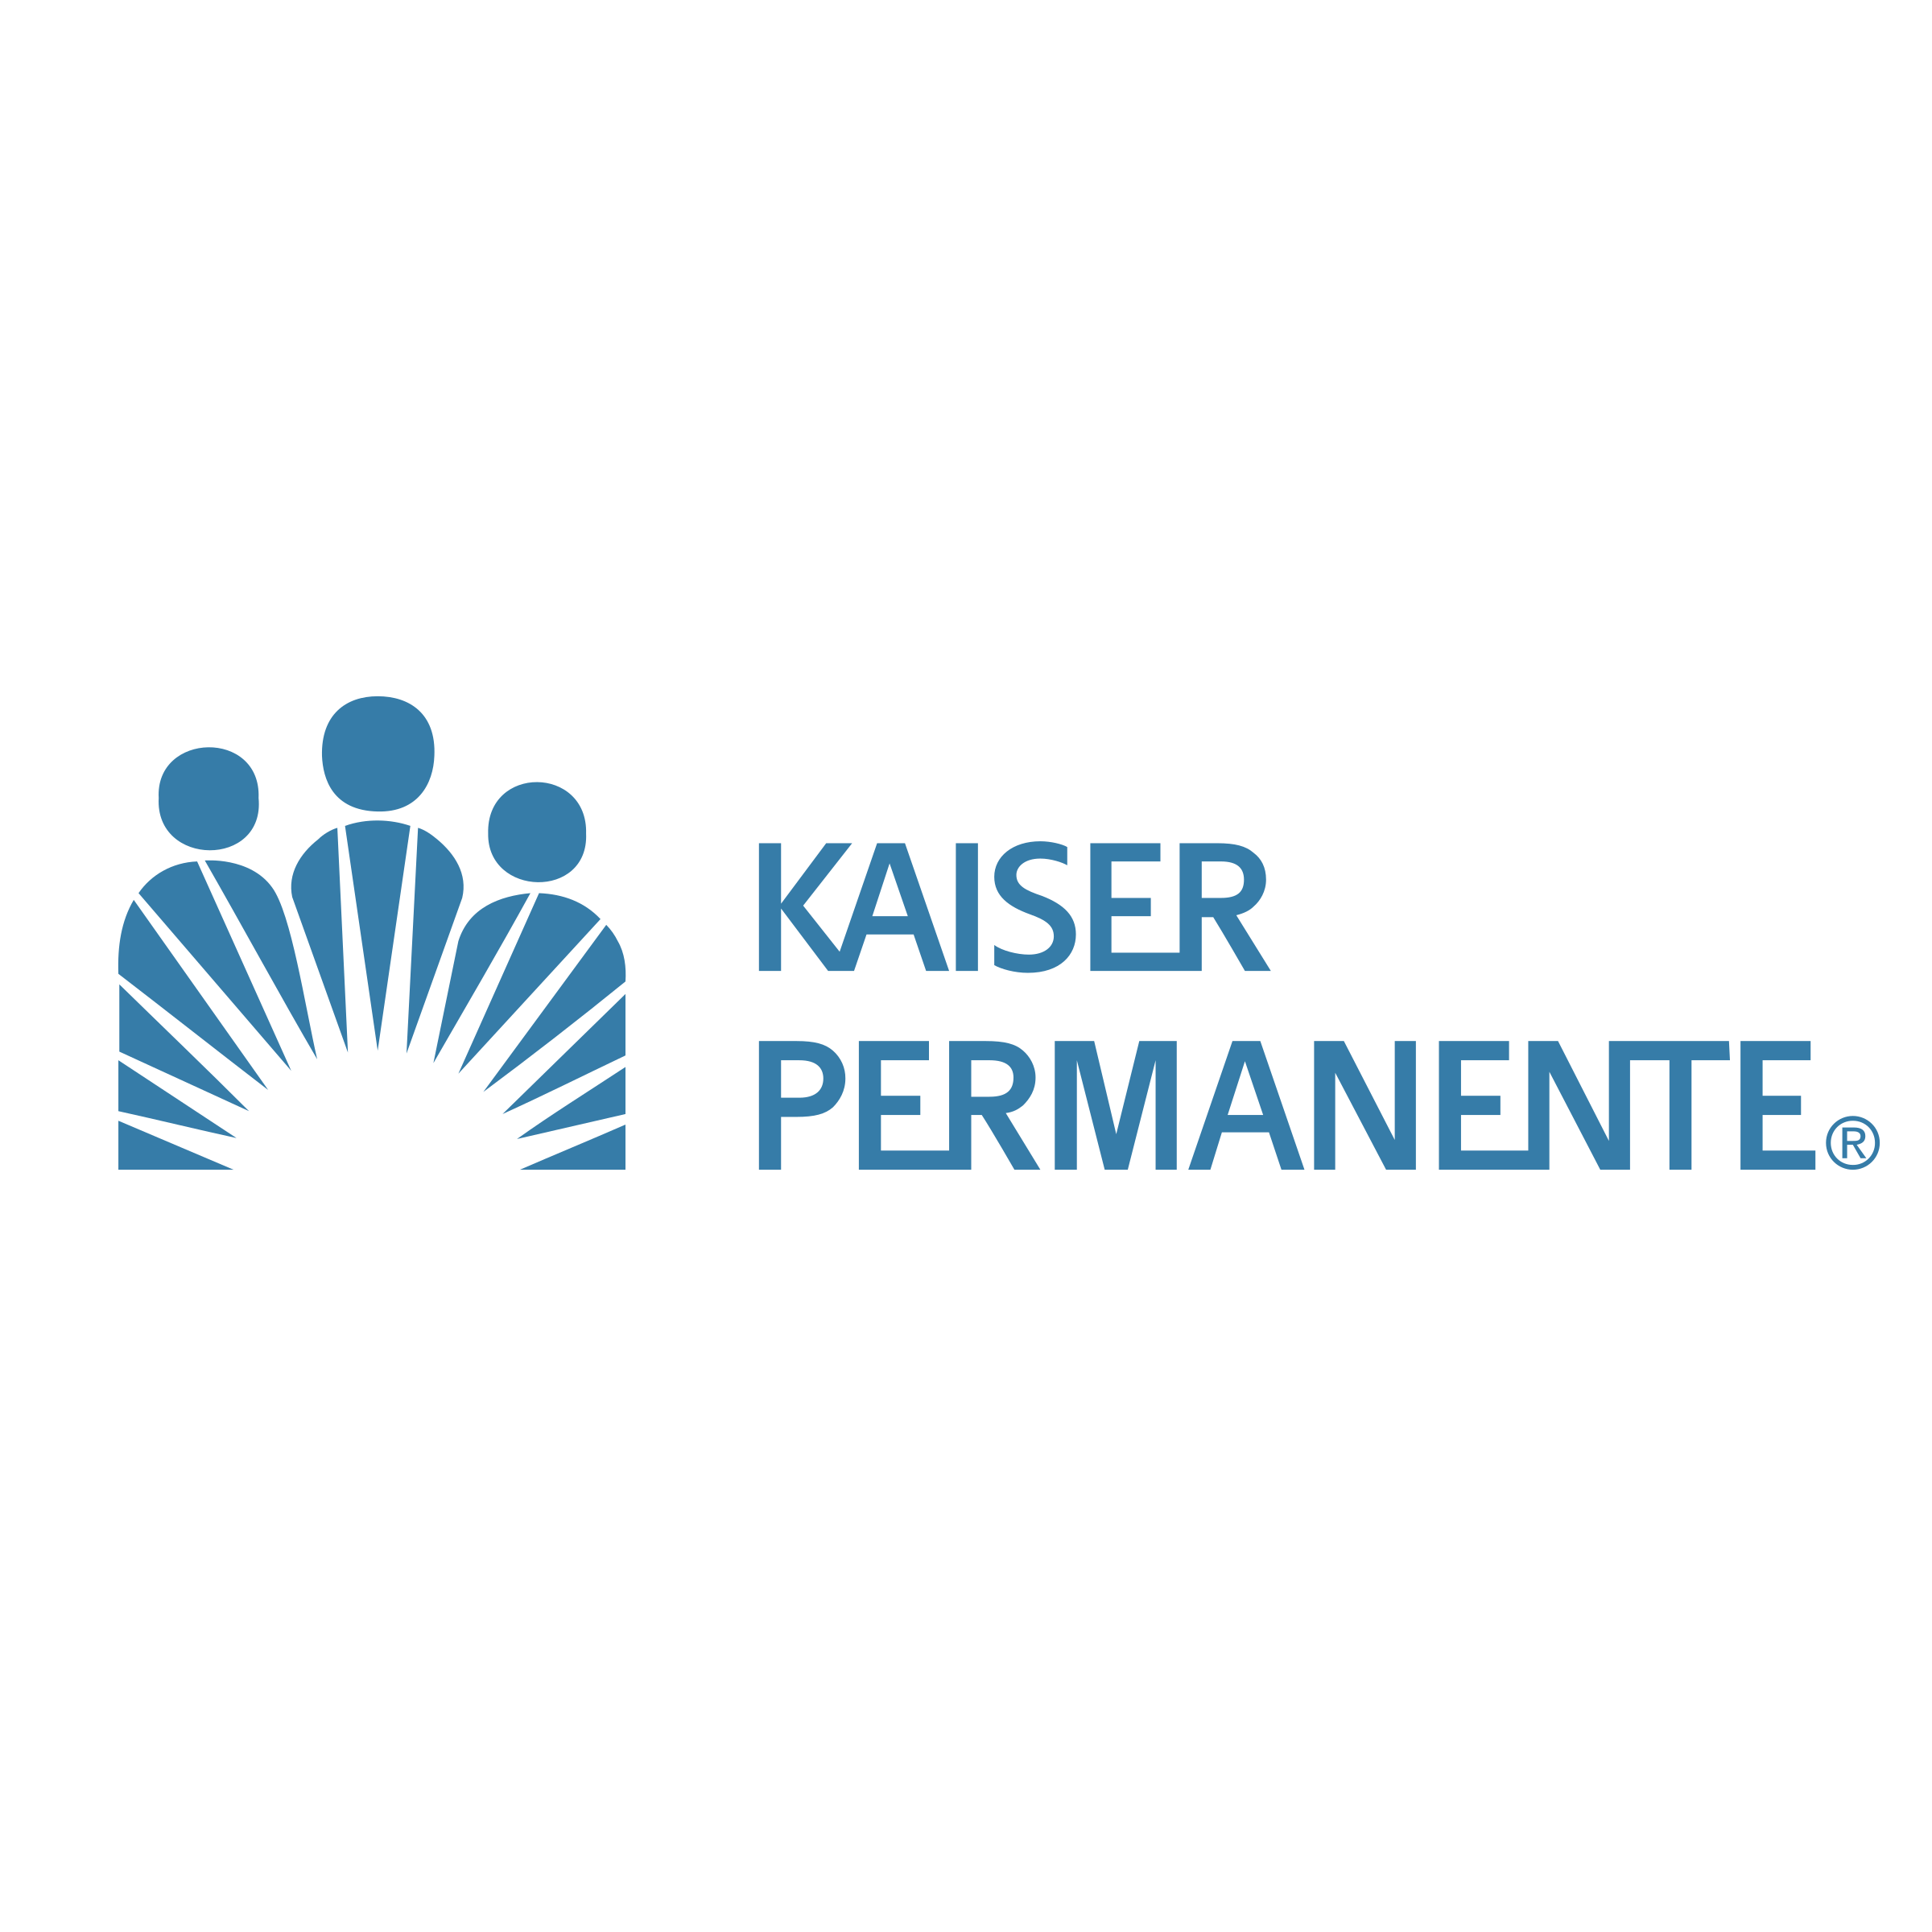 kaiser-permanente-logo-png-transparent.png